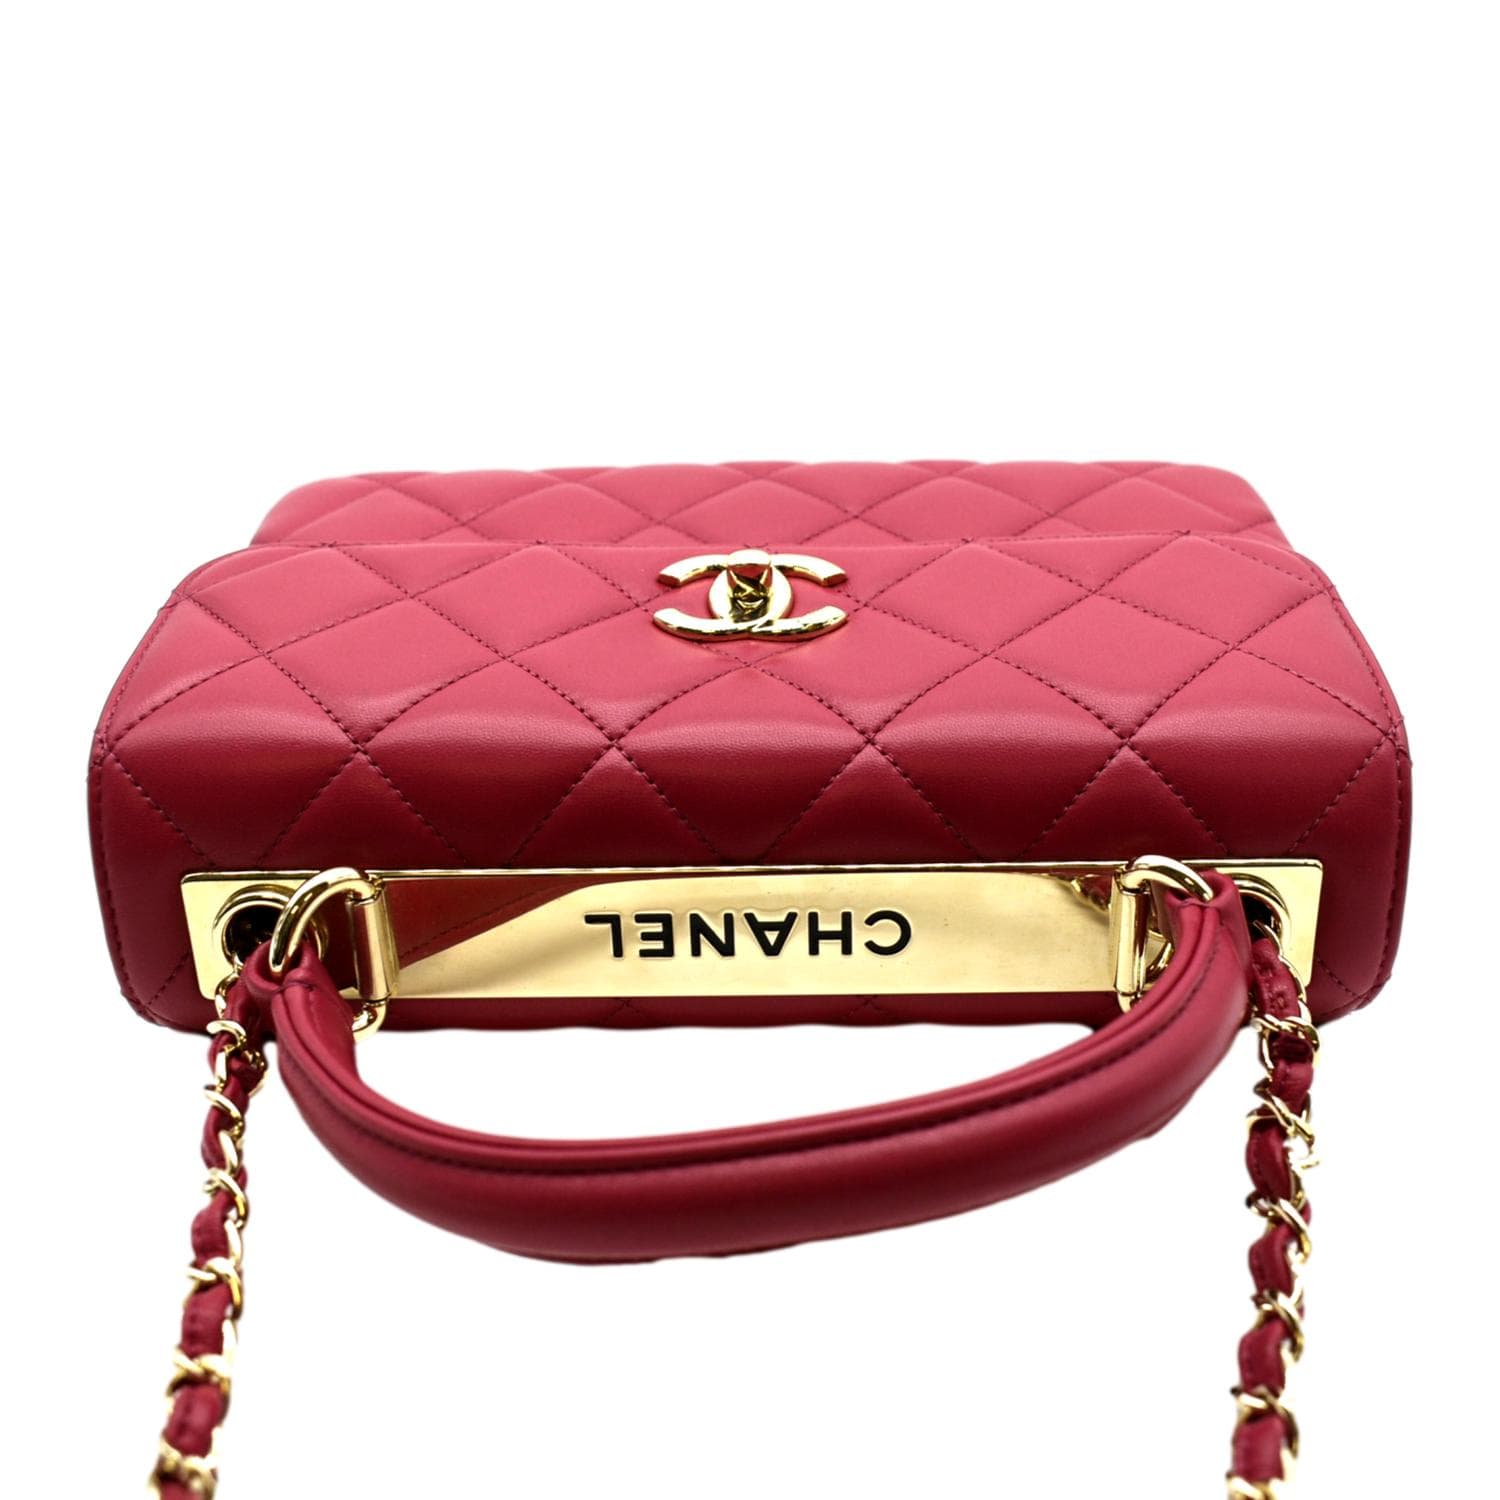 CHANEL, Bags, Sold Chanel Mini Trendy Cc